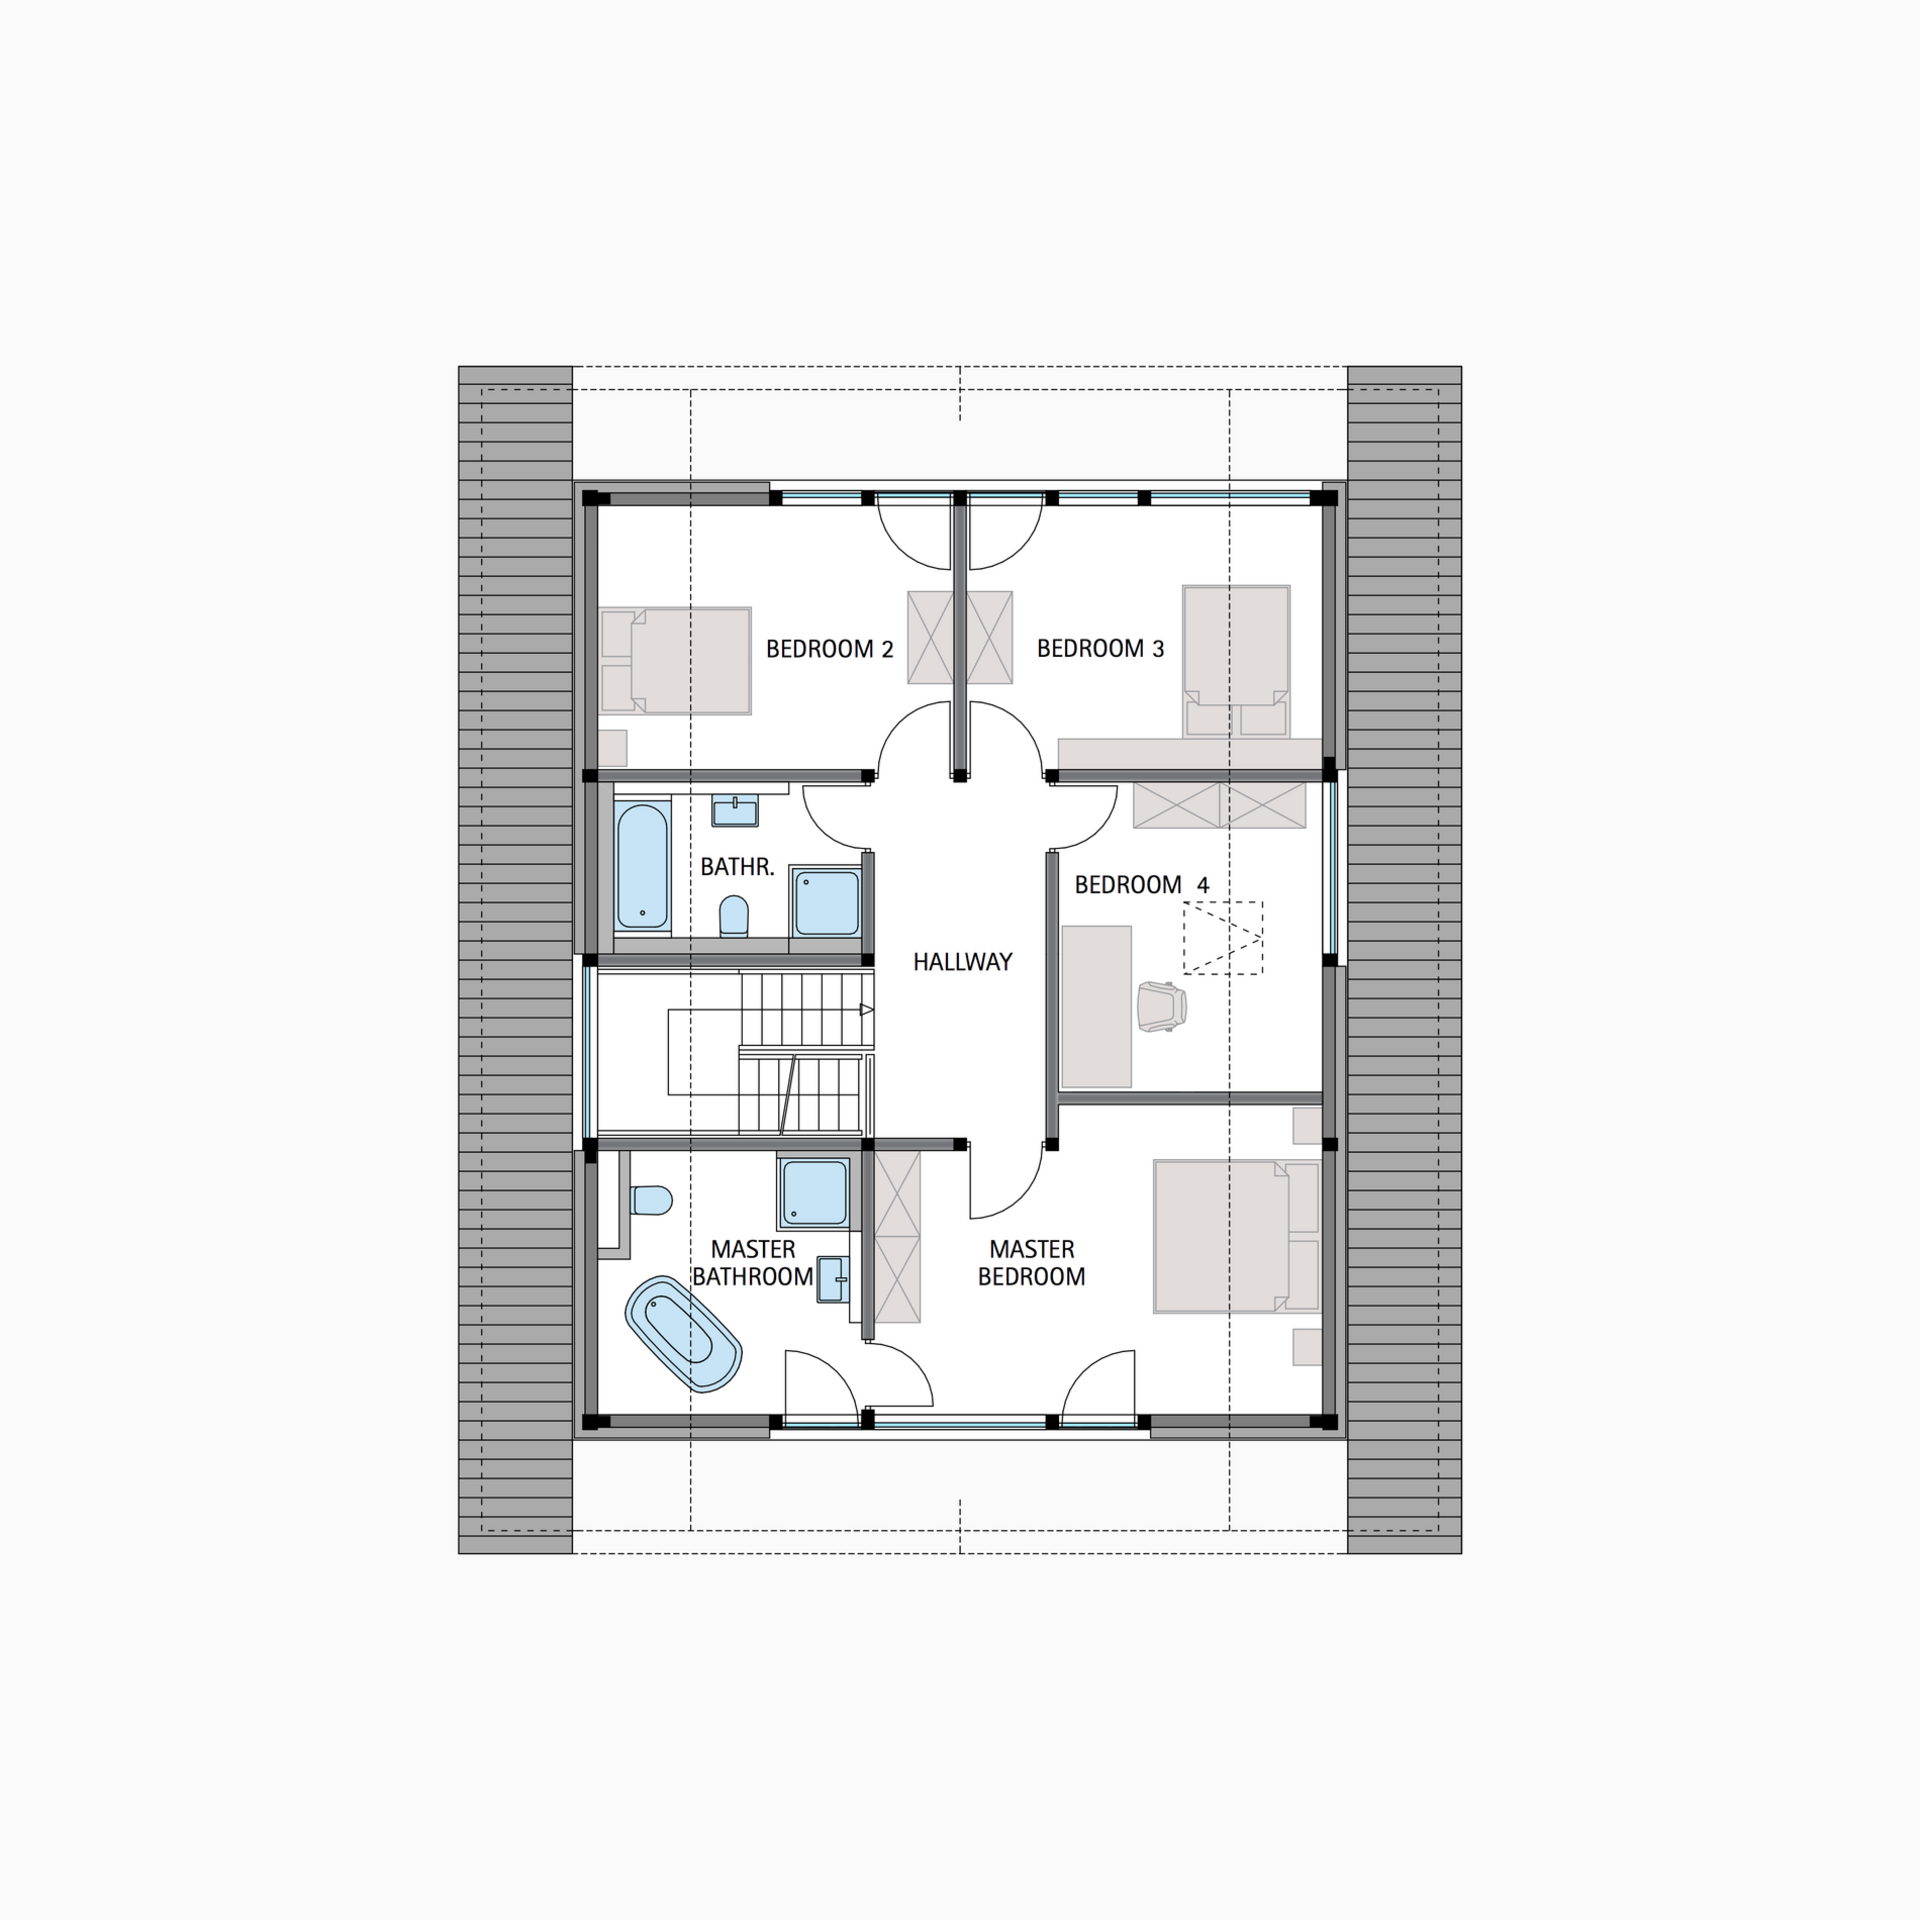 HUF house floor plan first floor MODUM 8:10